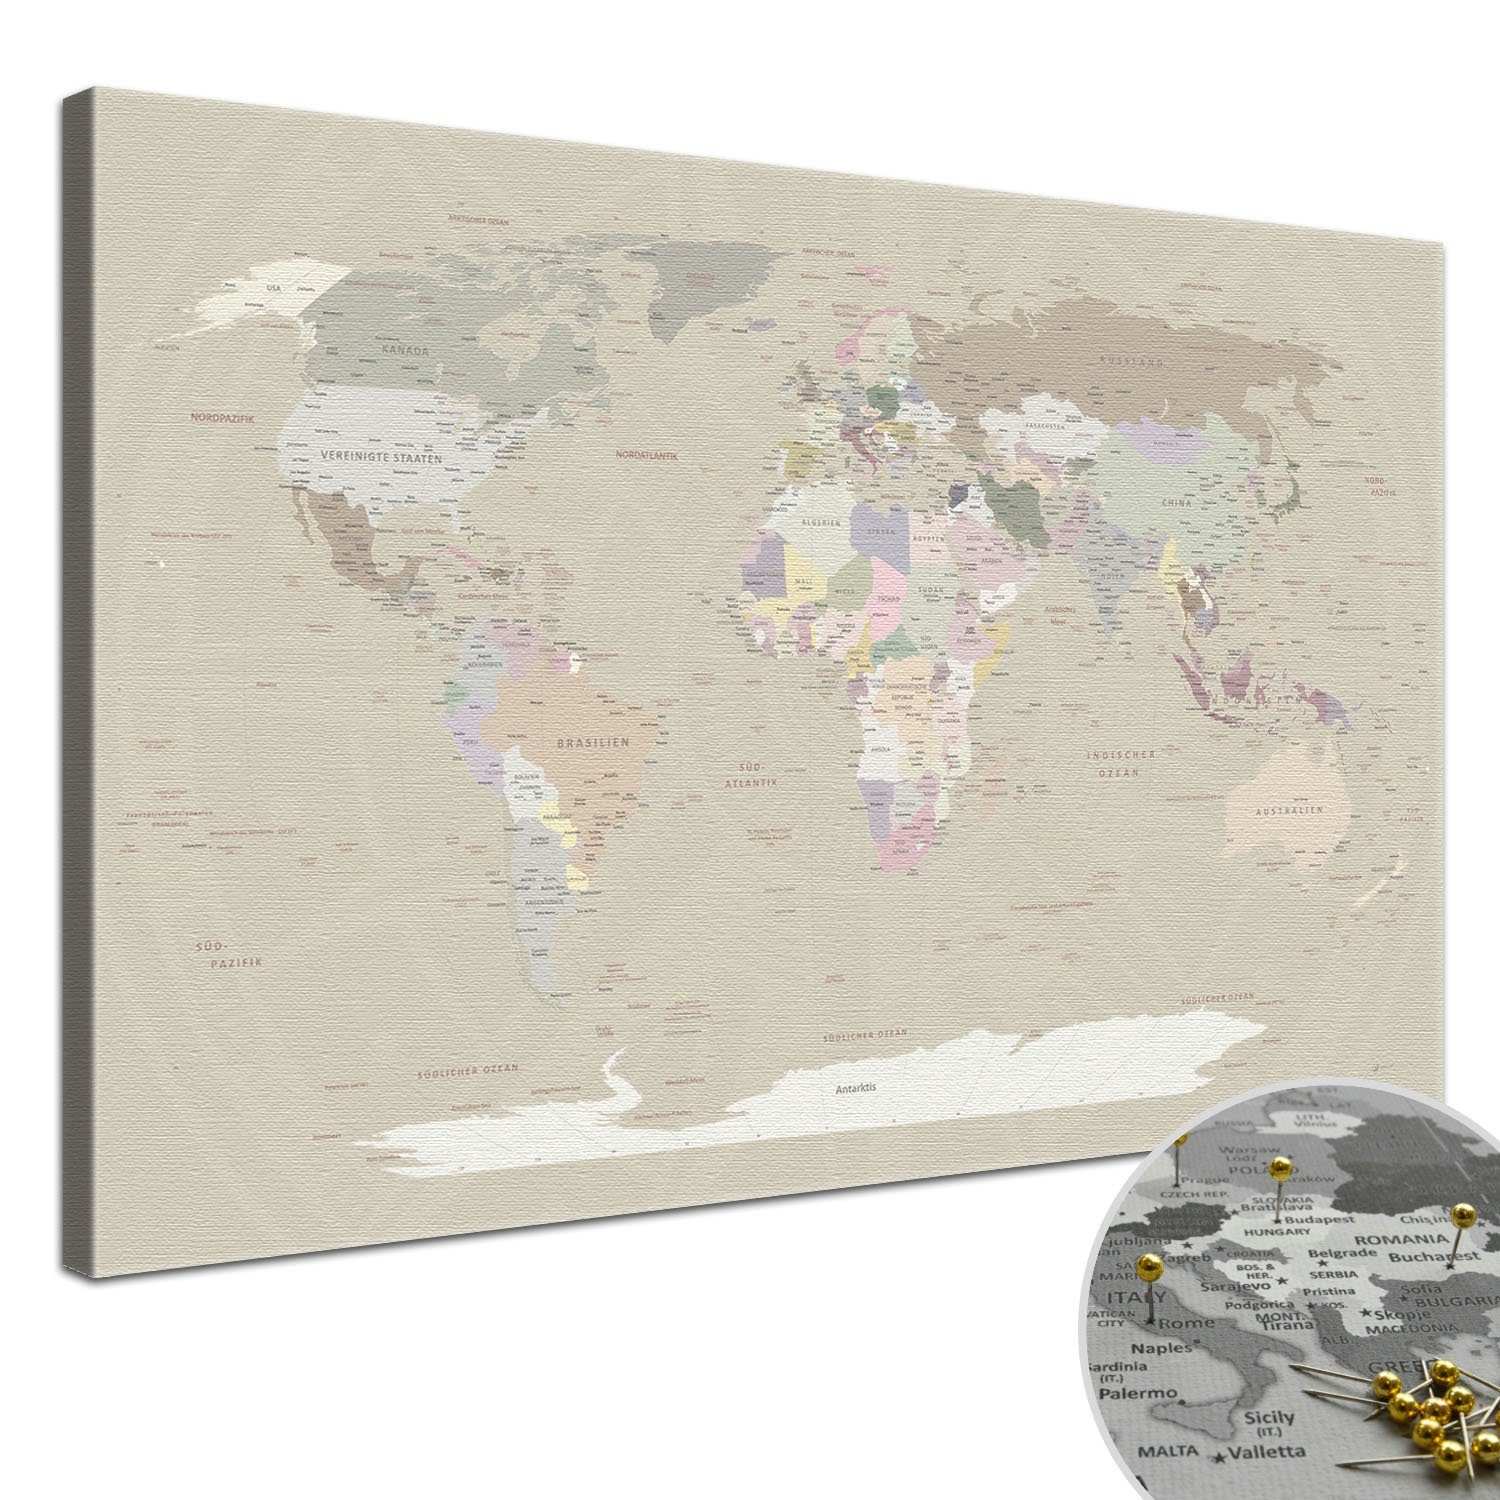 LANA KK Leinwandbild Weltkarte Pinnwand zum markieren von Reisezielen, deutsche Beschriftung Cappuccino